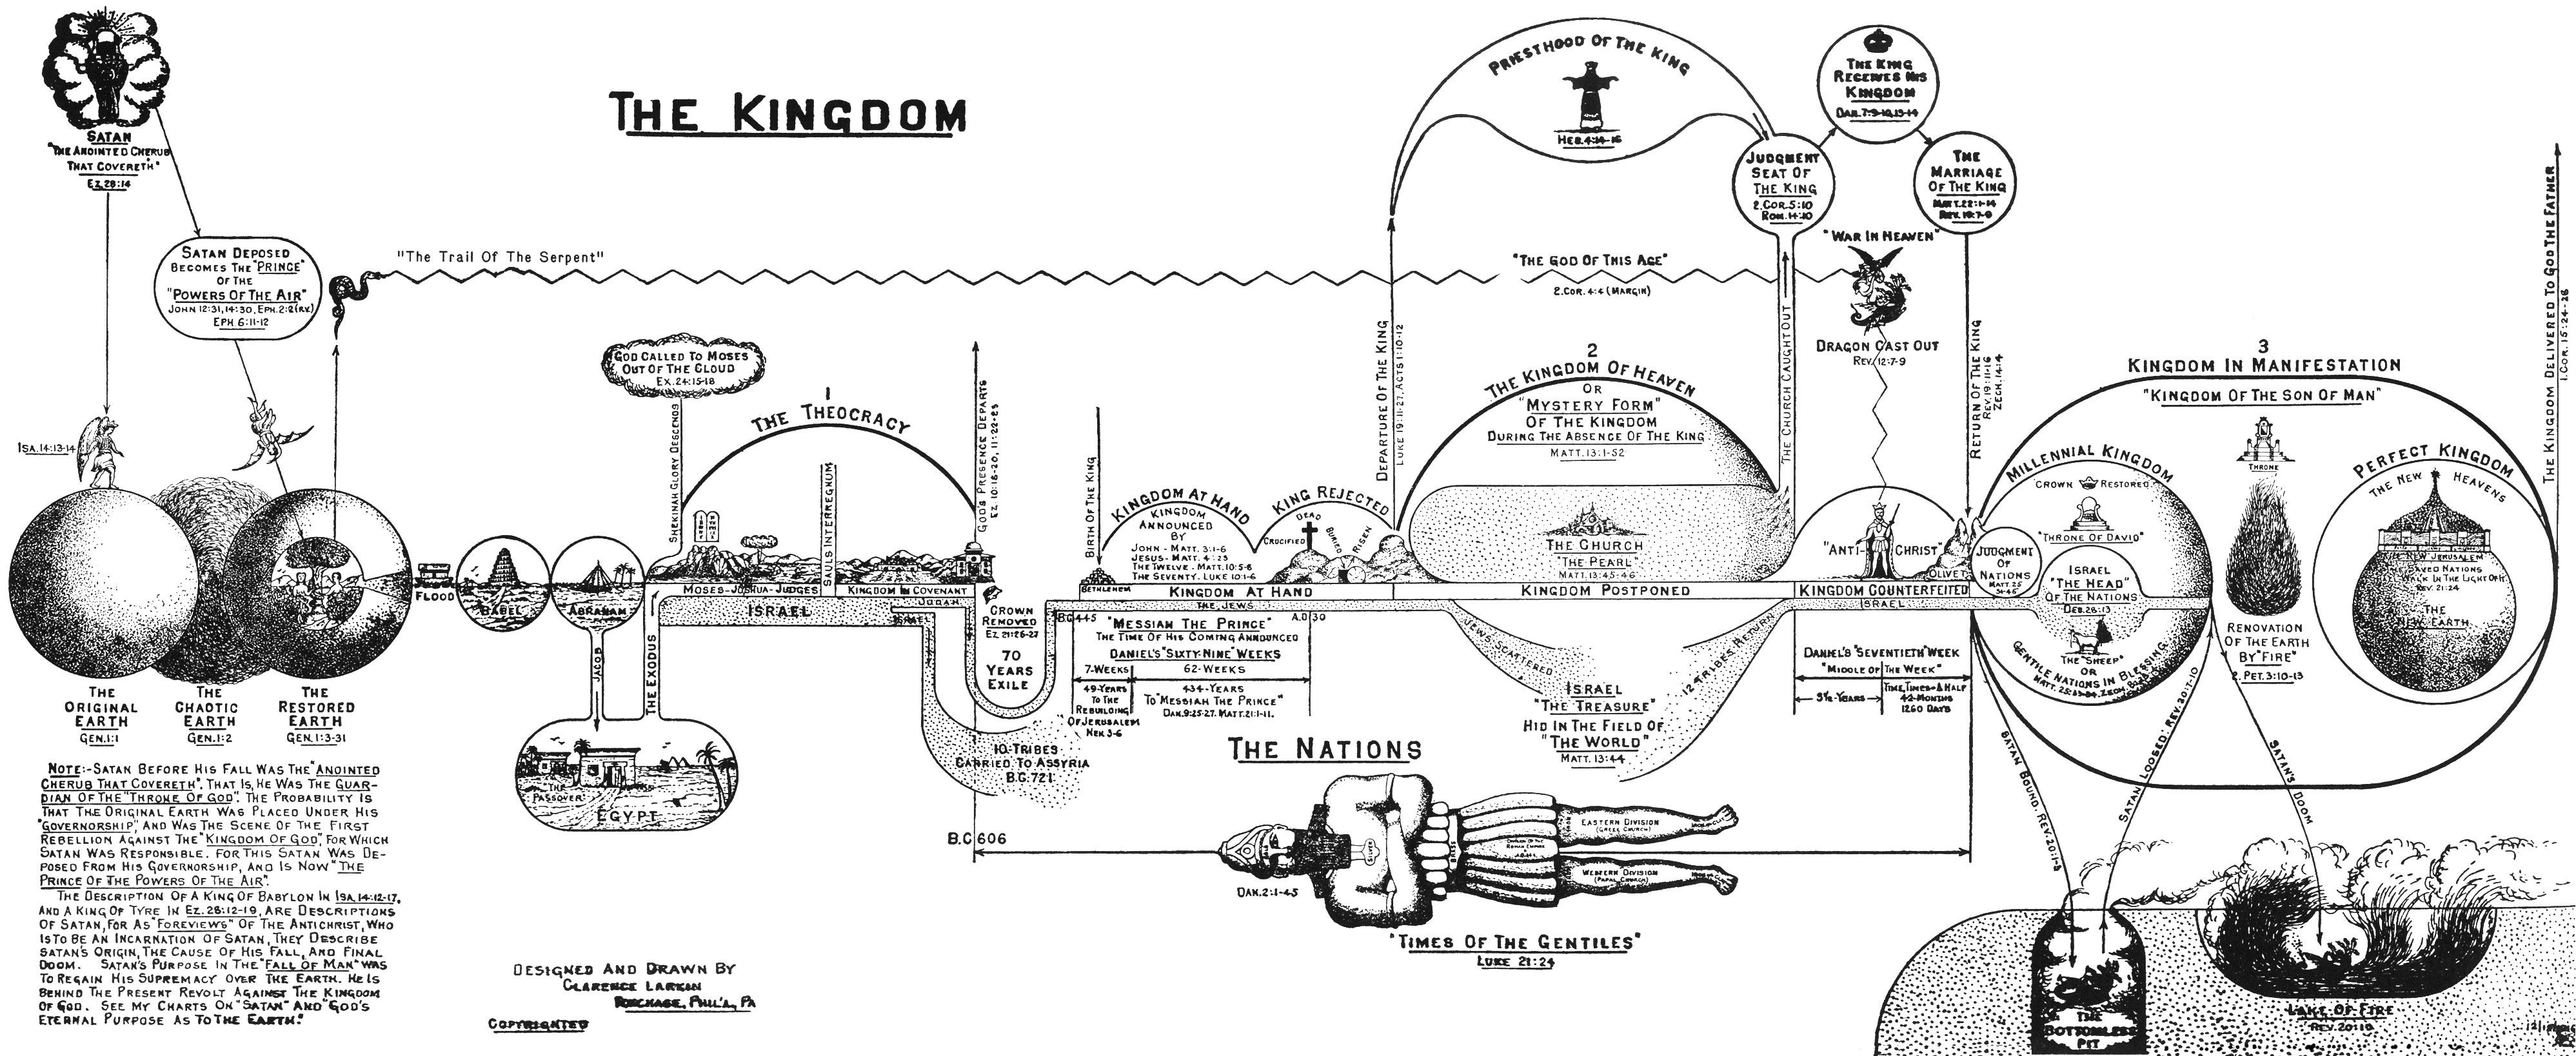 The Kingdom Illustration by Clarence Larkin